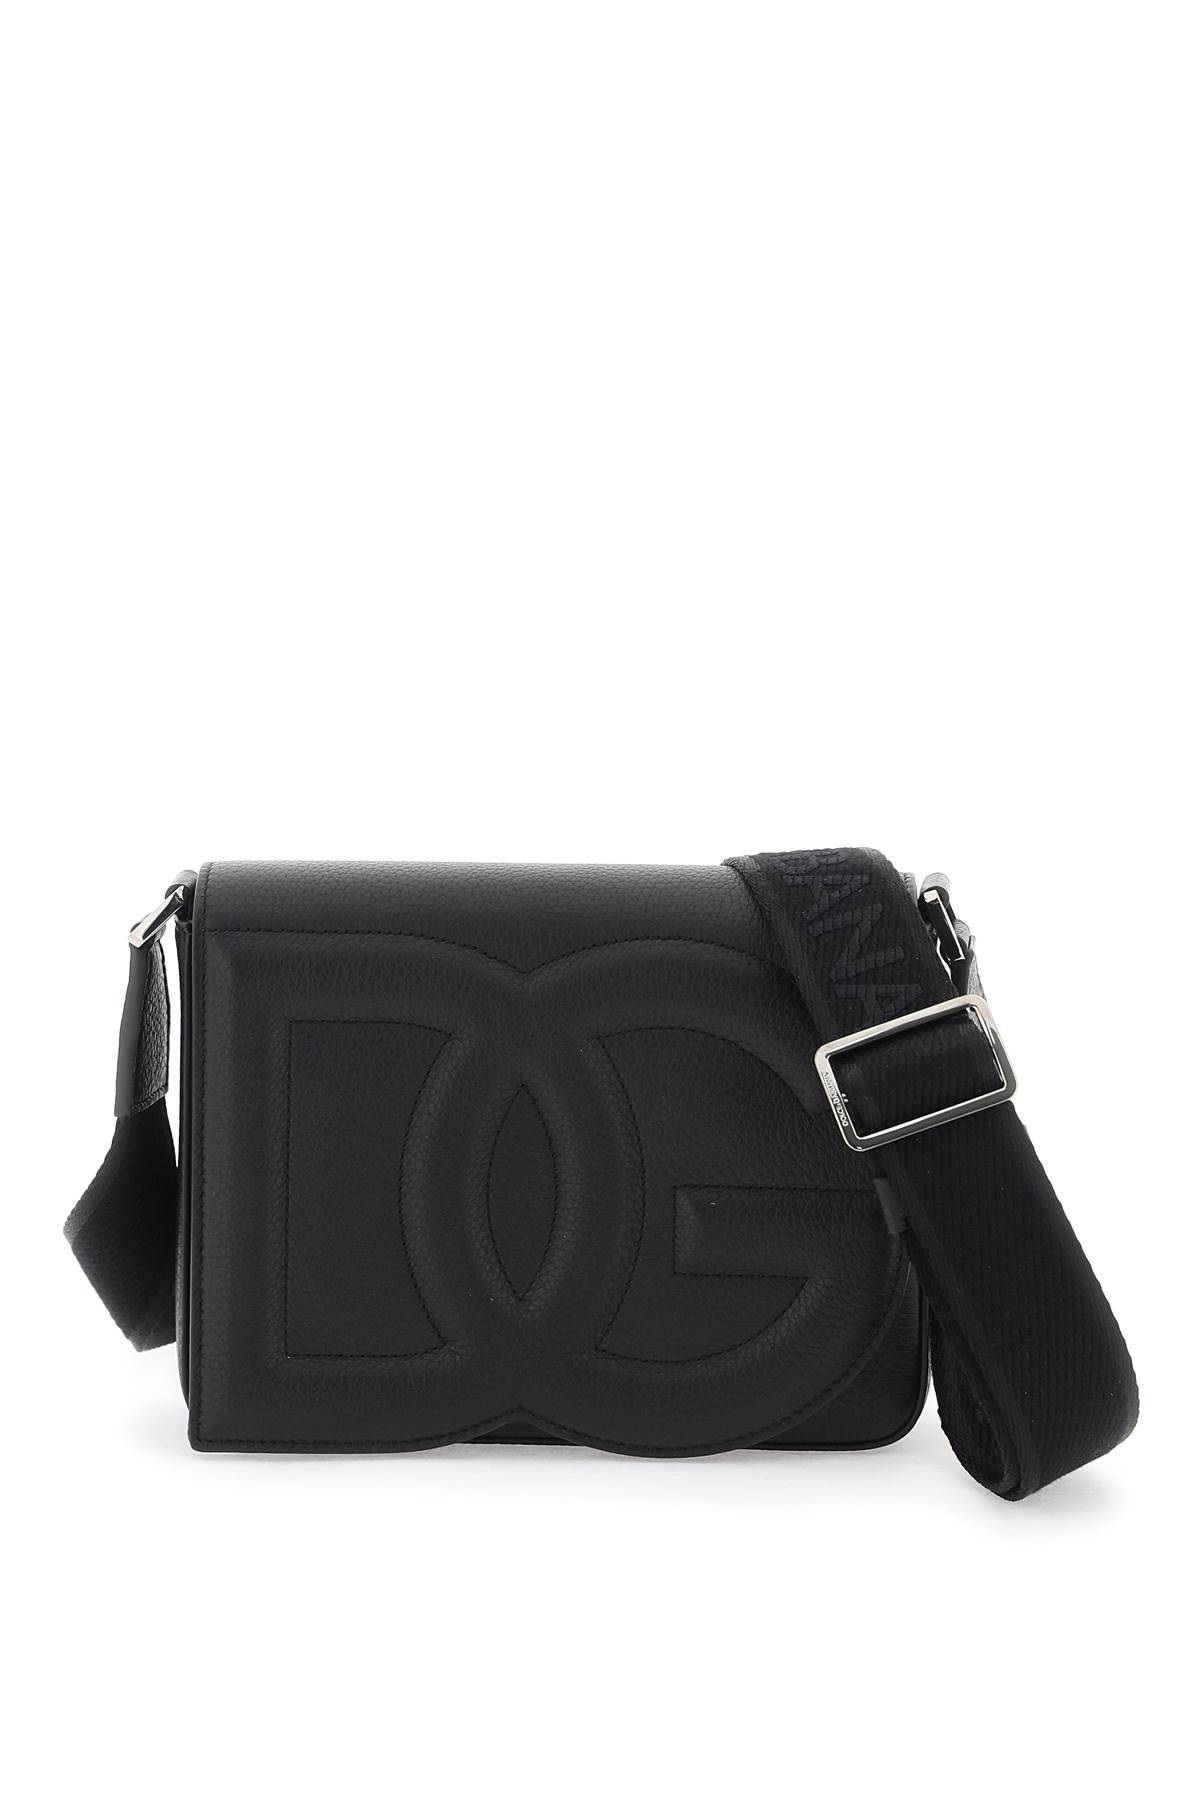 Dolce & Gabbana DOLCE & GABBANA medium-sized dg logo shoulder bag